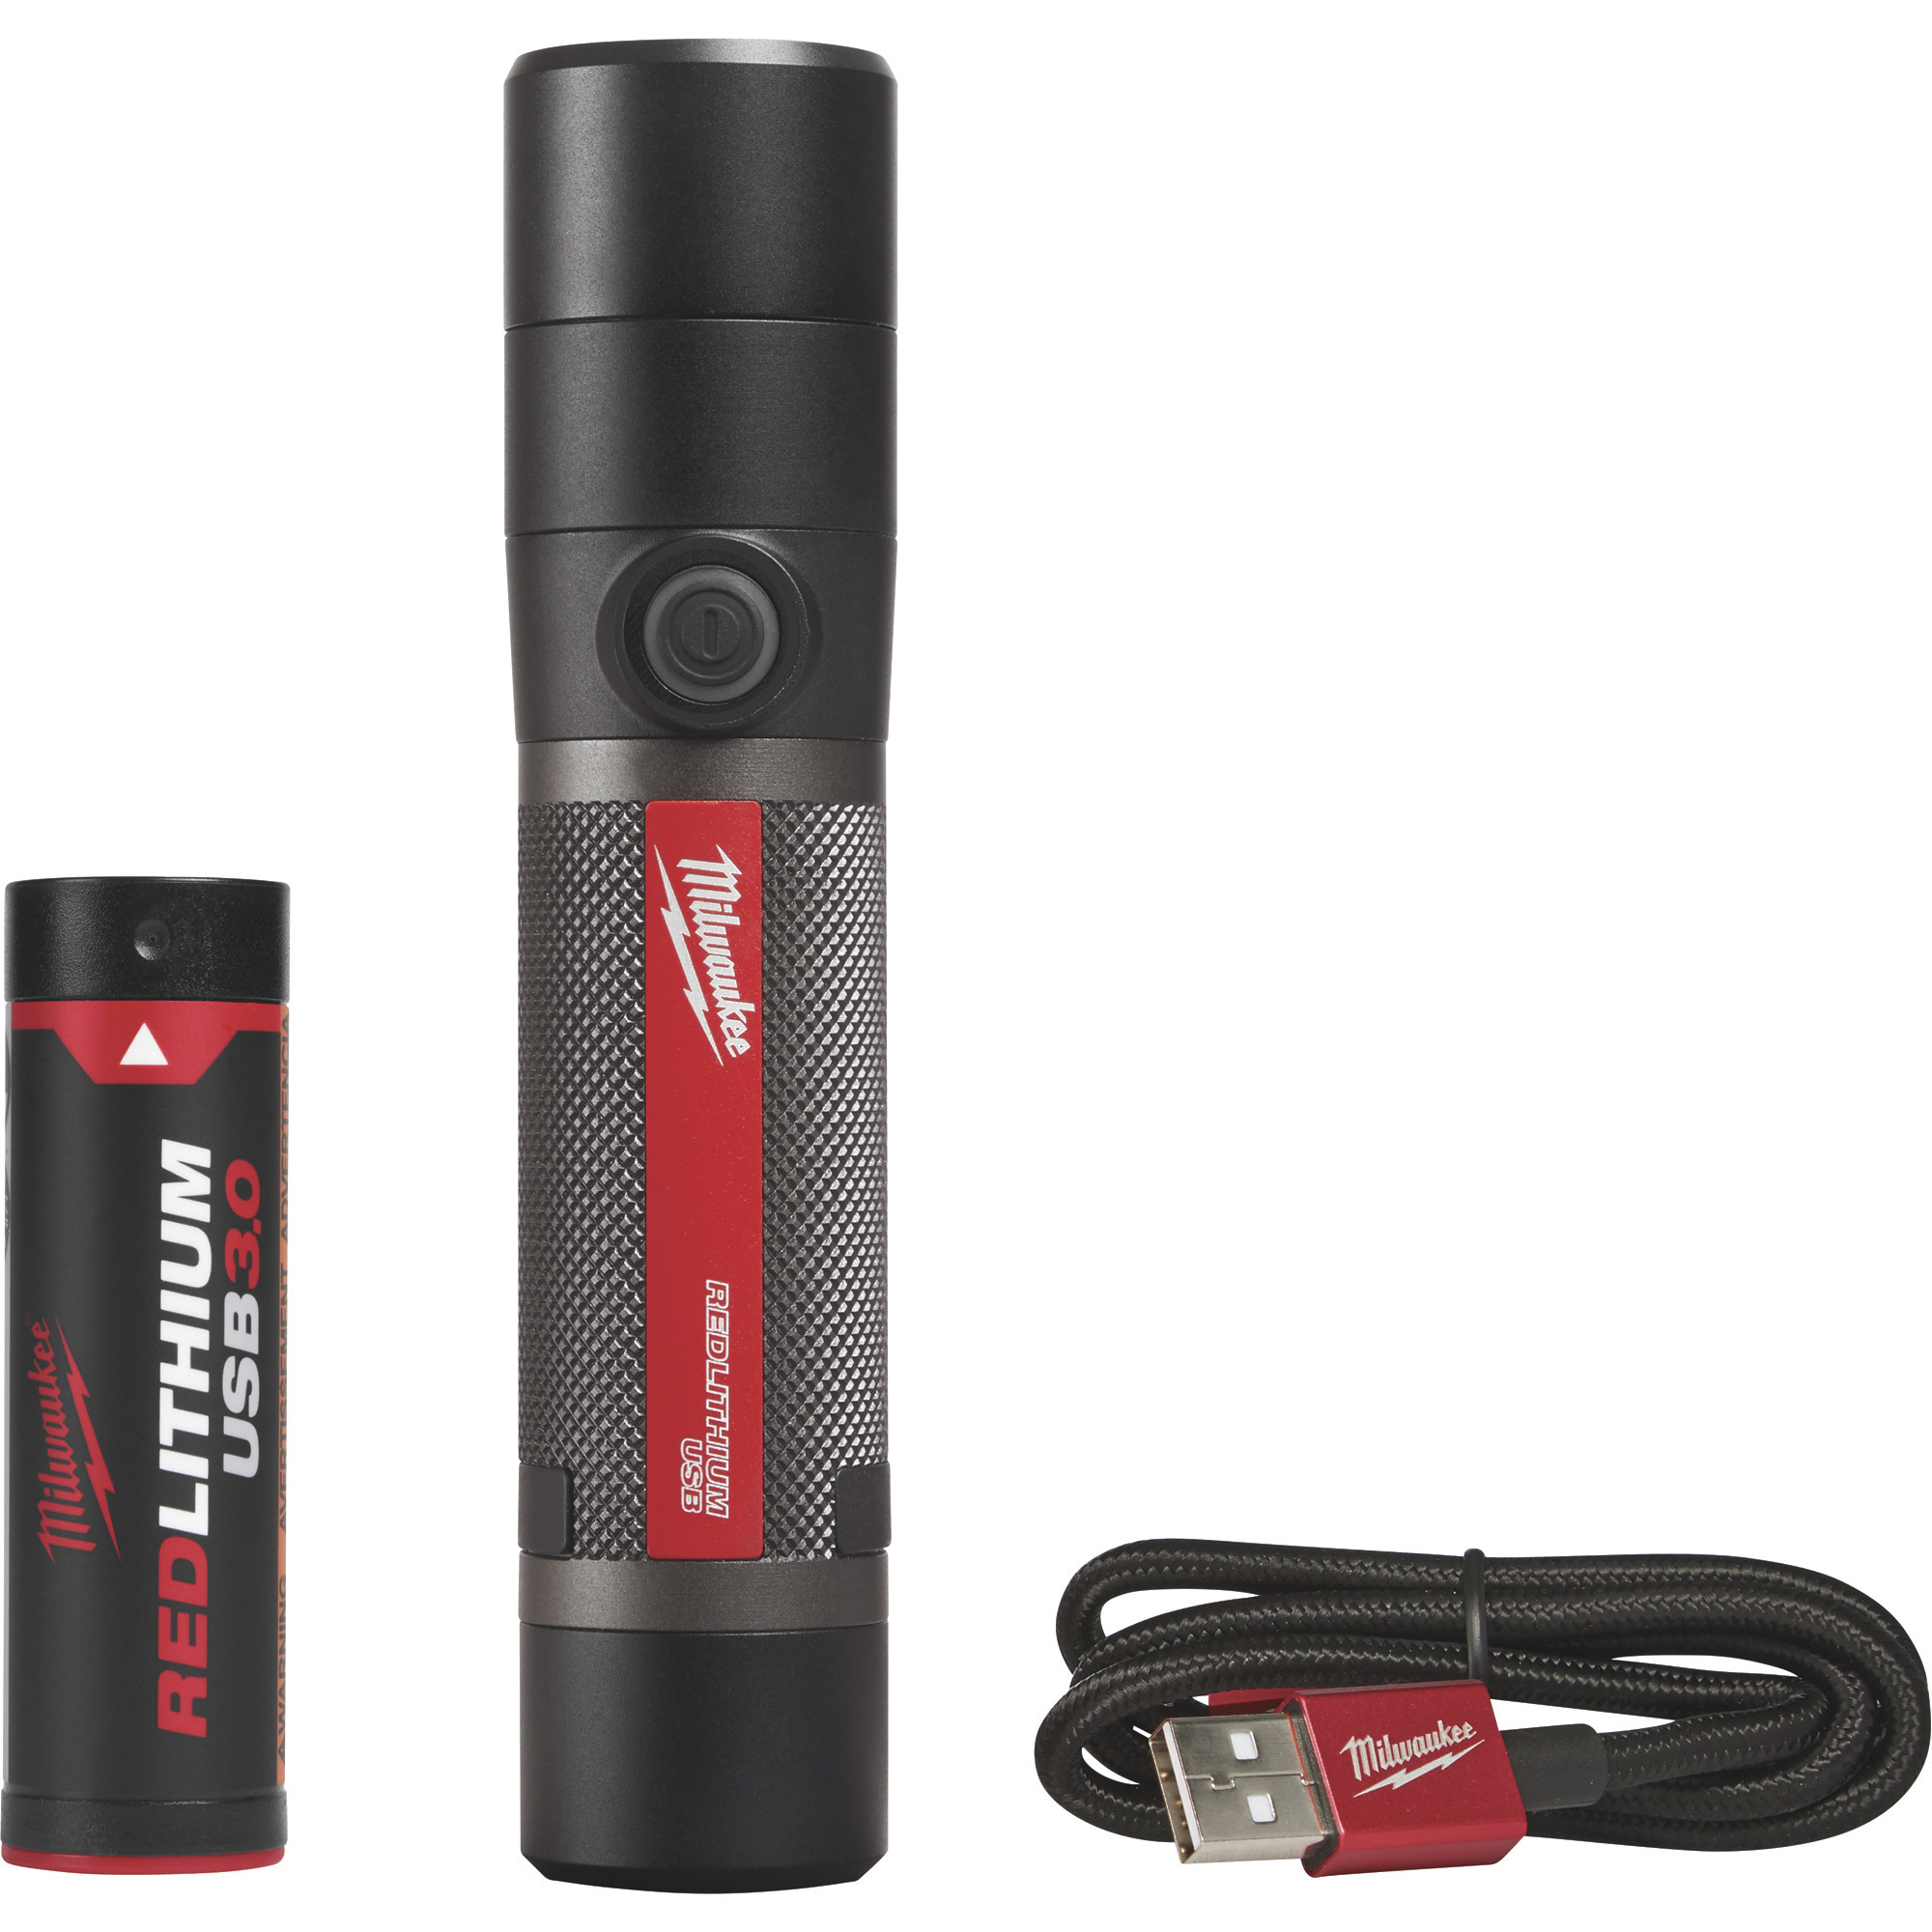 Milwaukee USB Rechargeable Compact Flashlight,800 Lumens, Model 2160-21